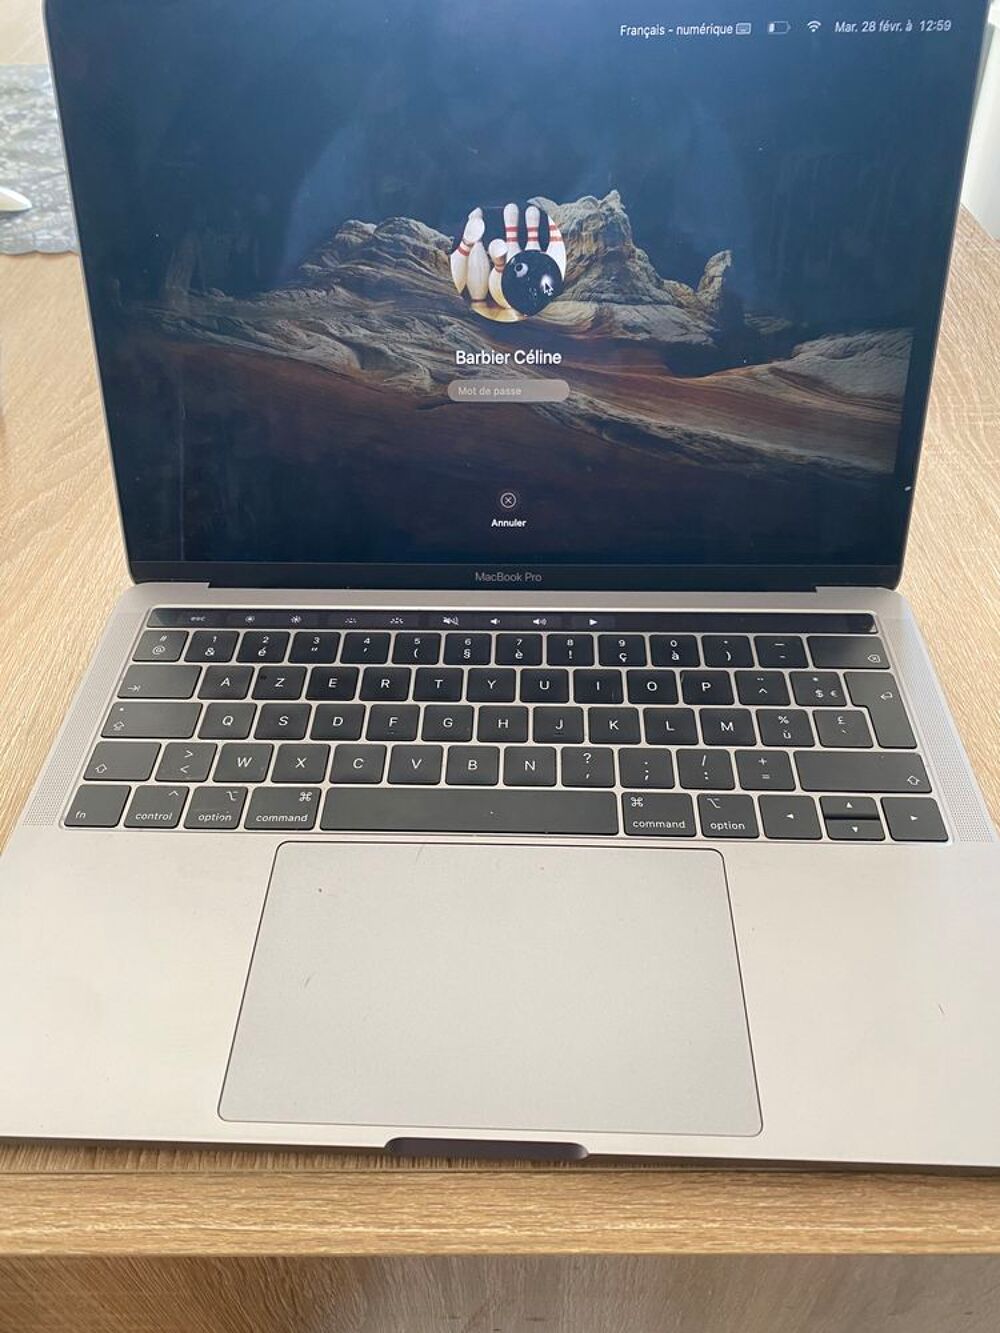 MacBook 2019 Matriel informatique